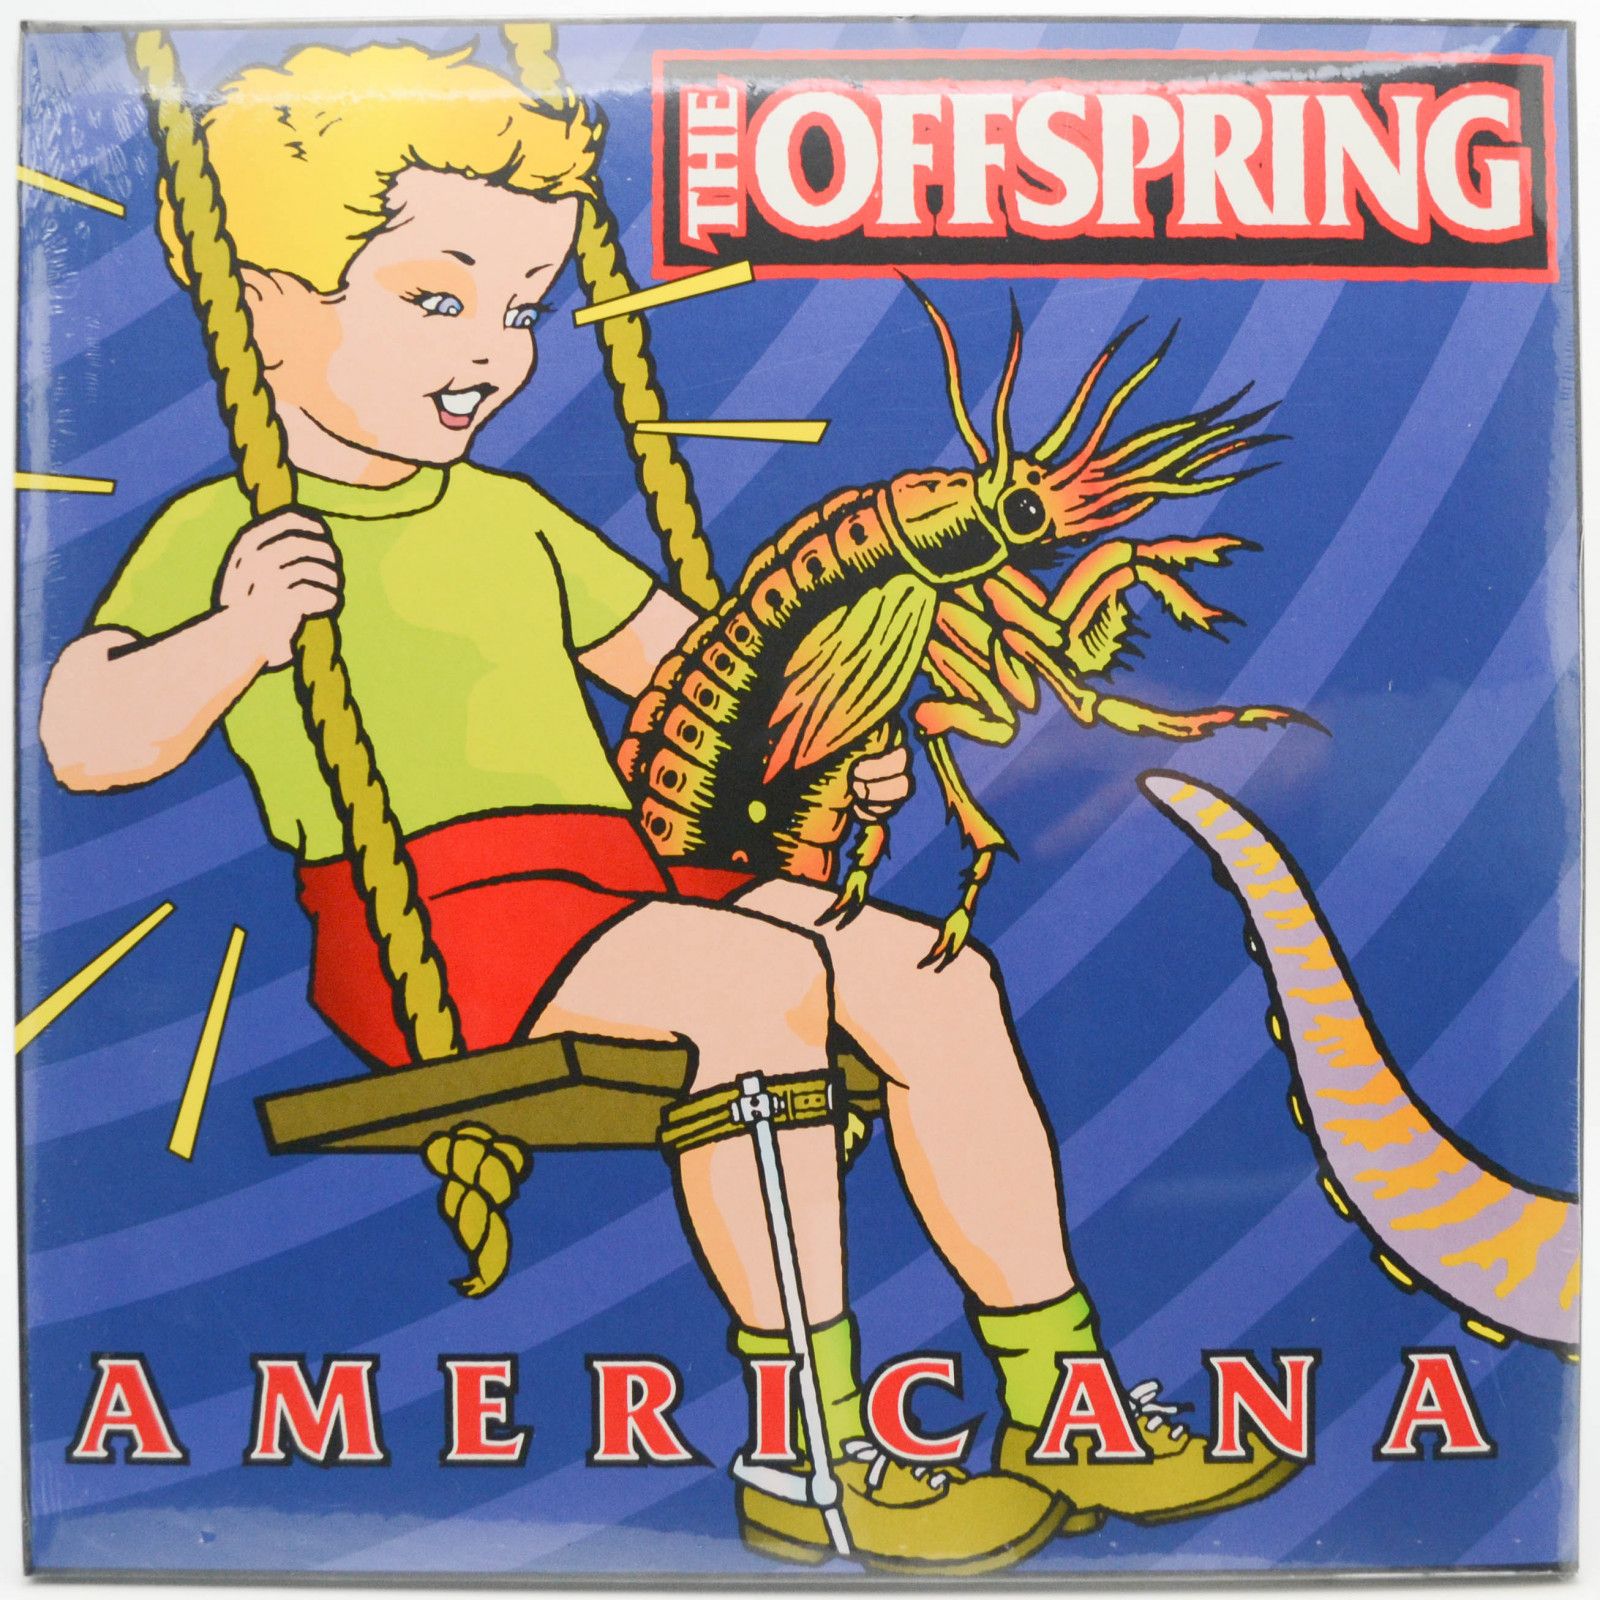 Offspring — Americana, 1998